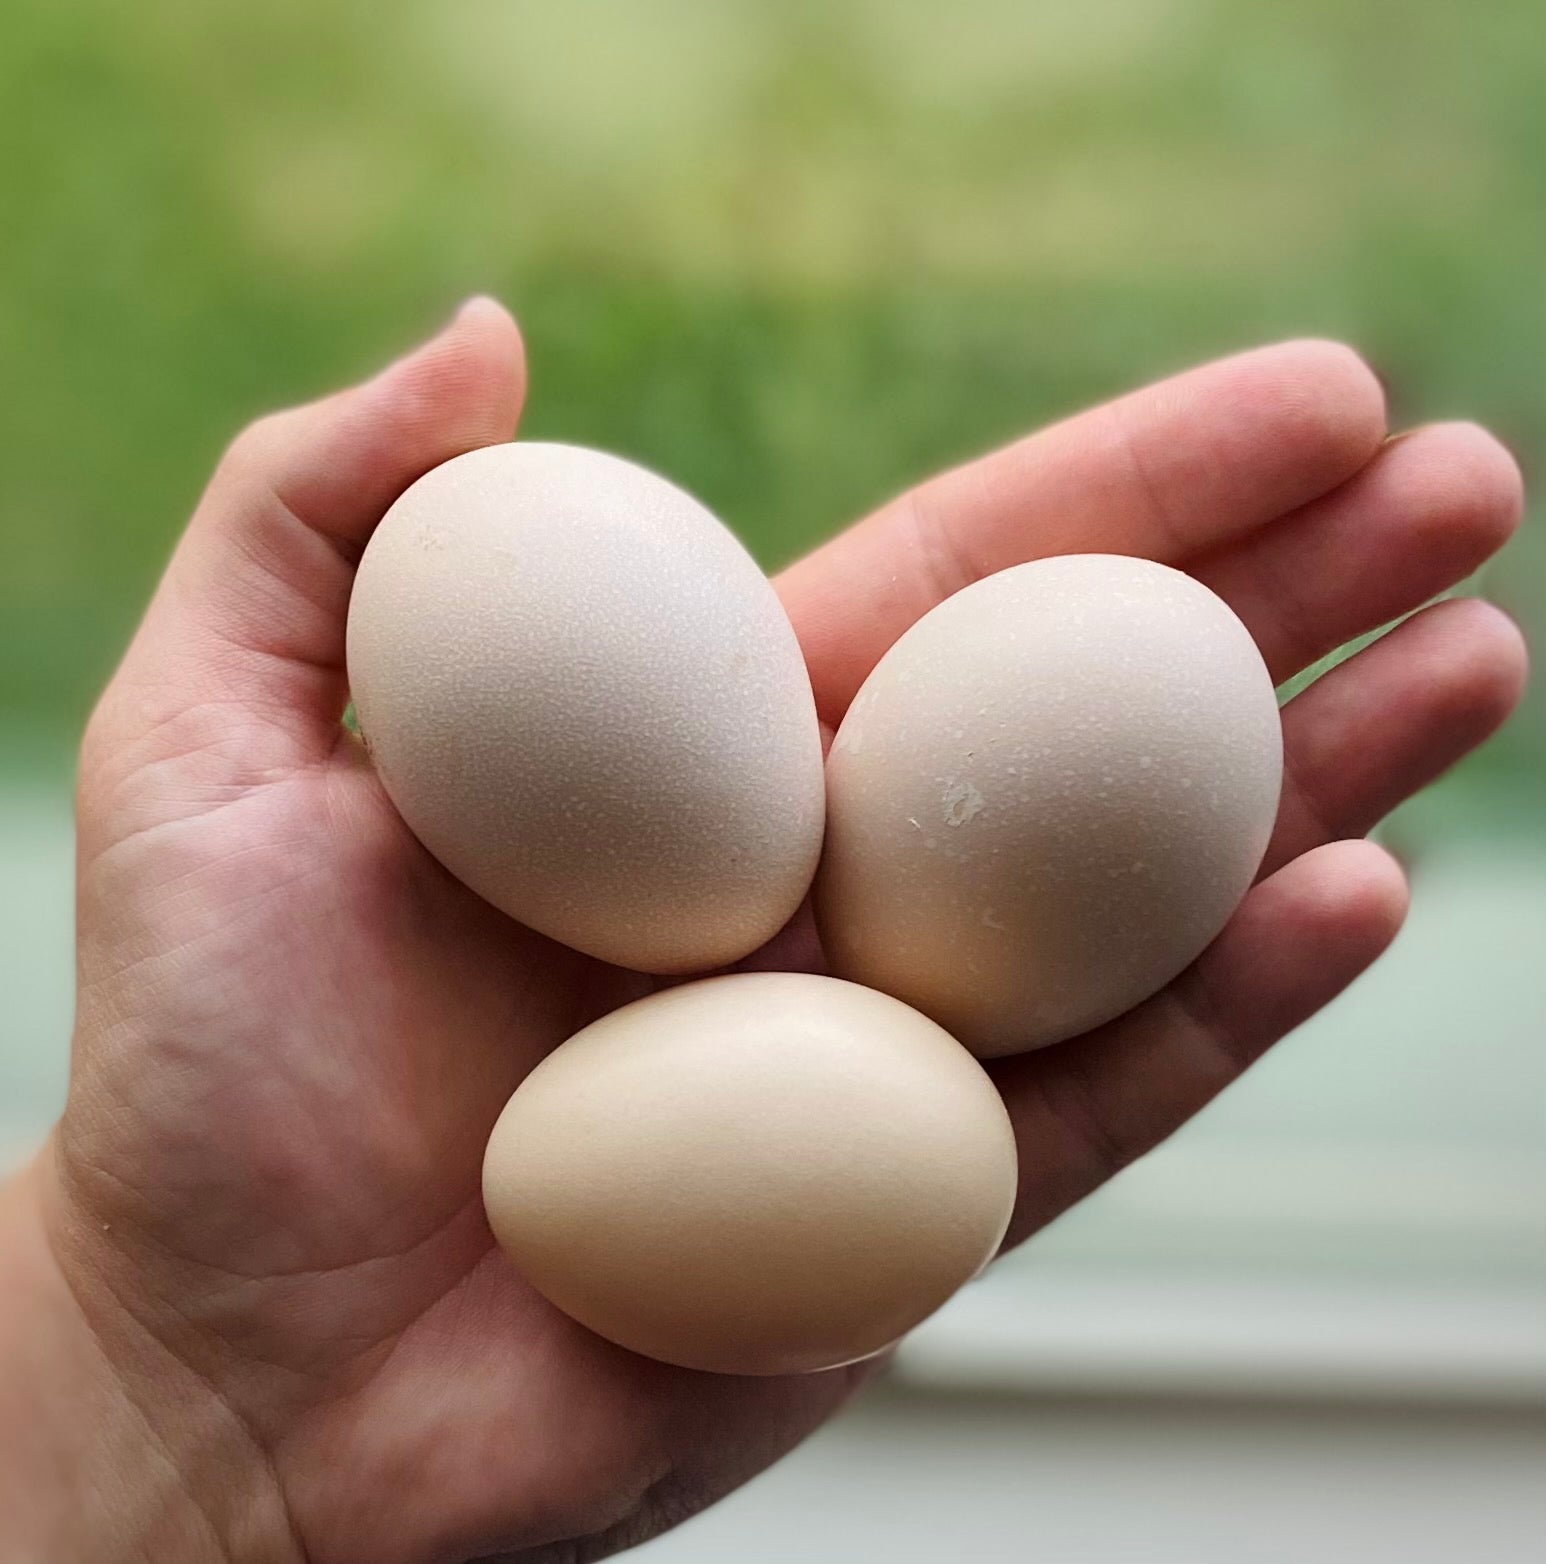 Ayam Cemani Hatching Eggs